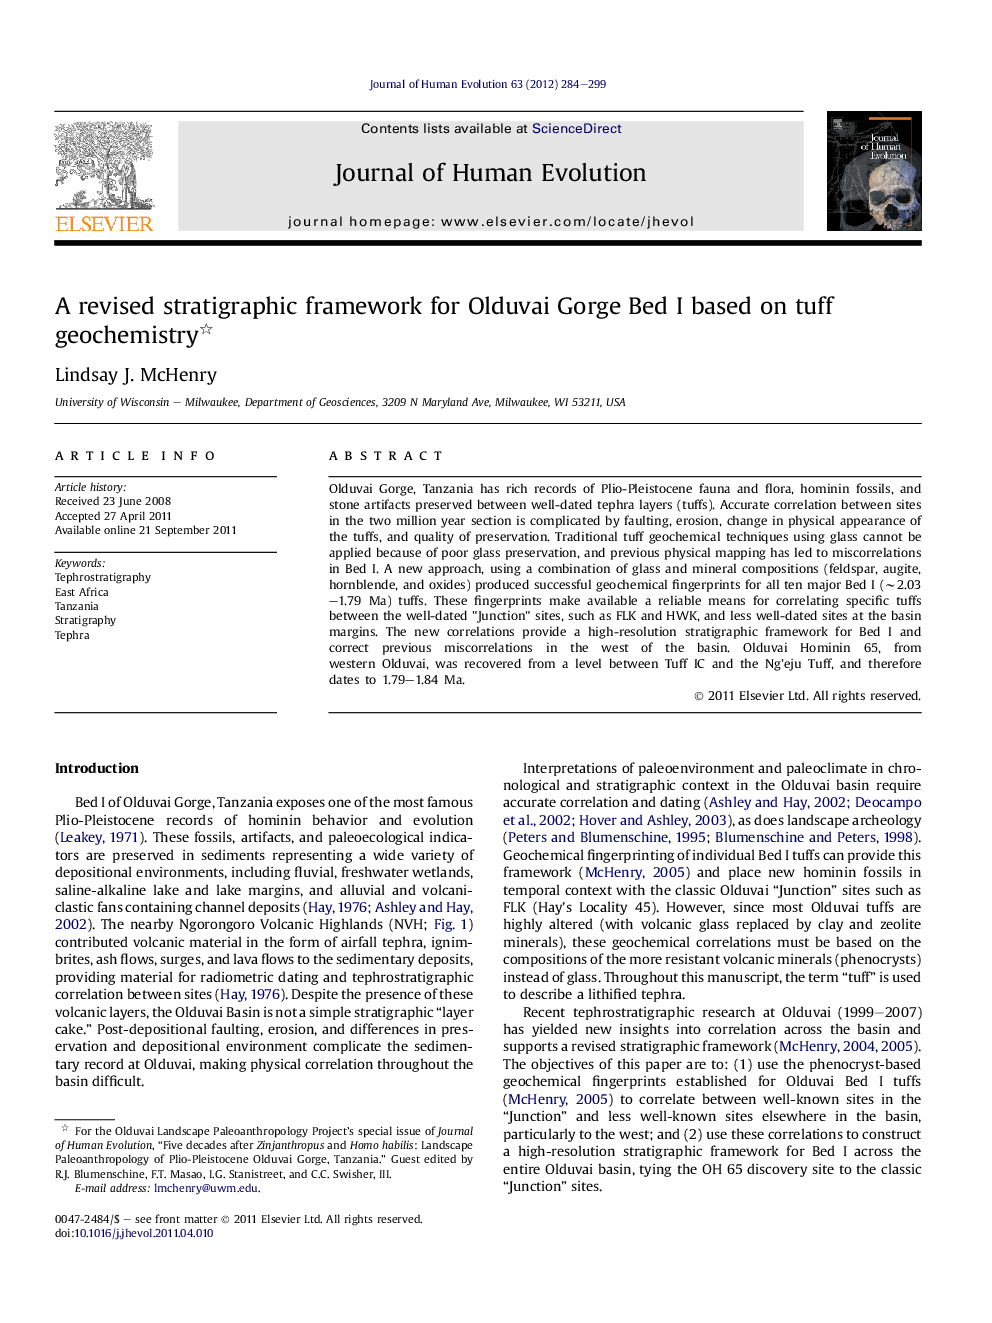 A revised stratigraphic framework for Olduvai Gorge Bed I based on tuff geochemistry 